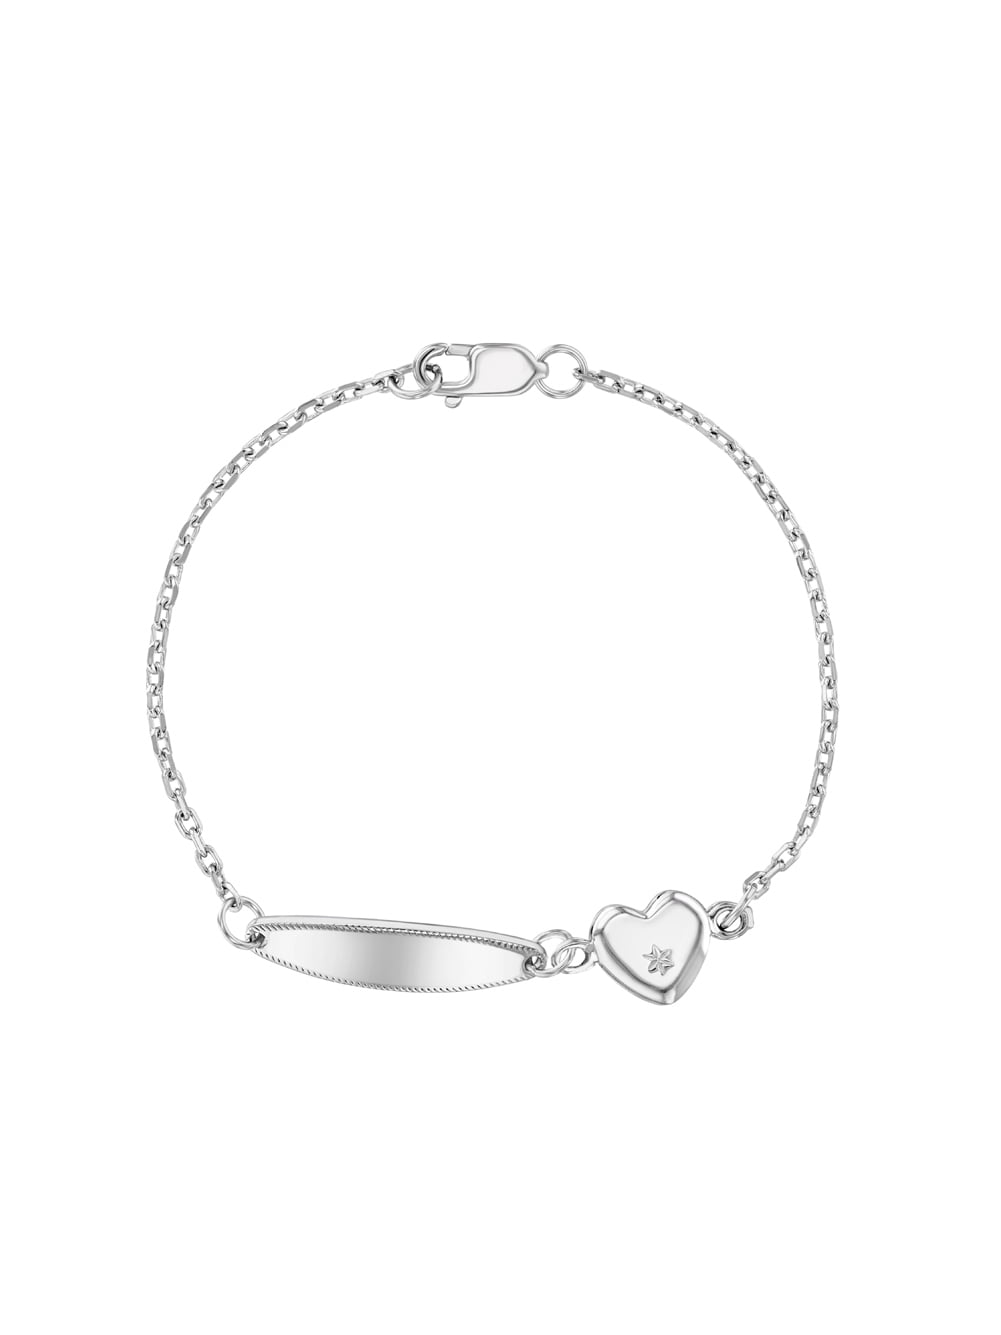 925 Sterling Silver Personalised Heart Baby ID Bracelet 5.5" FREE ENGRAVING 